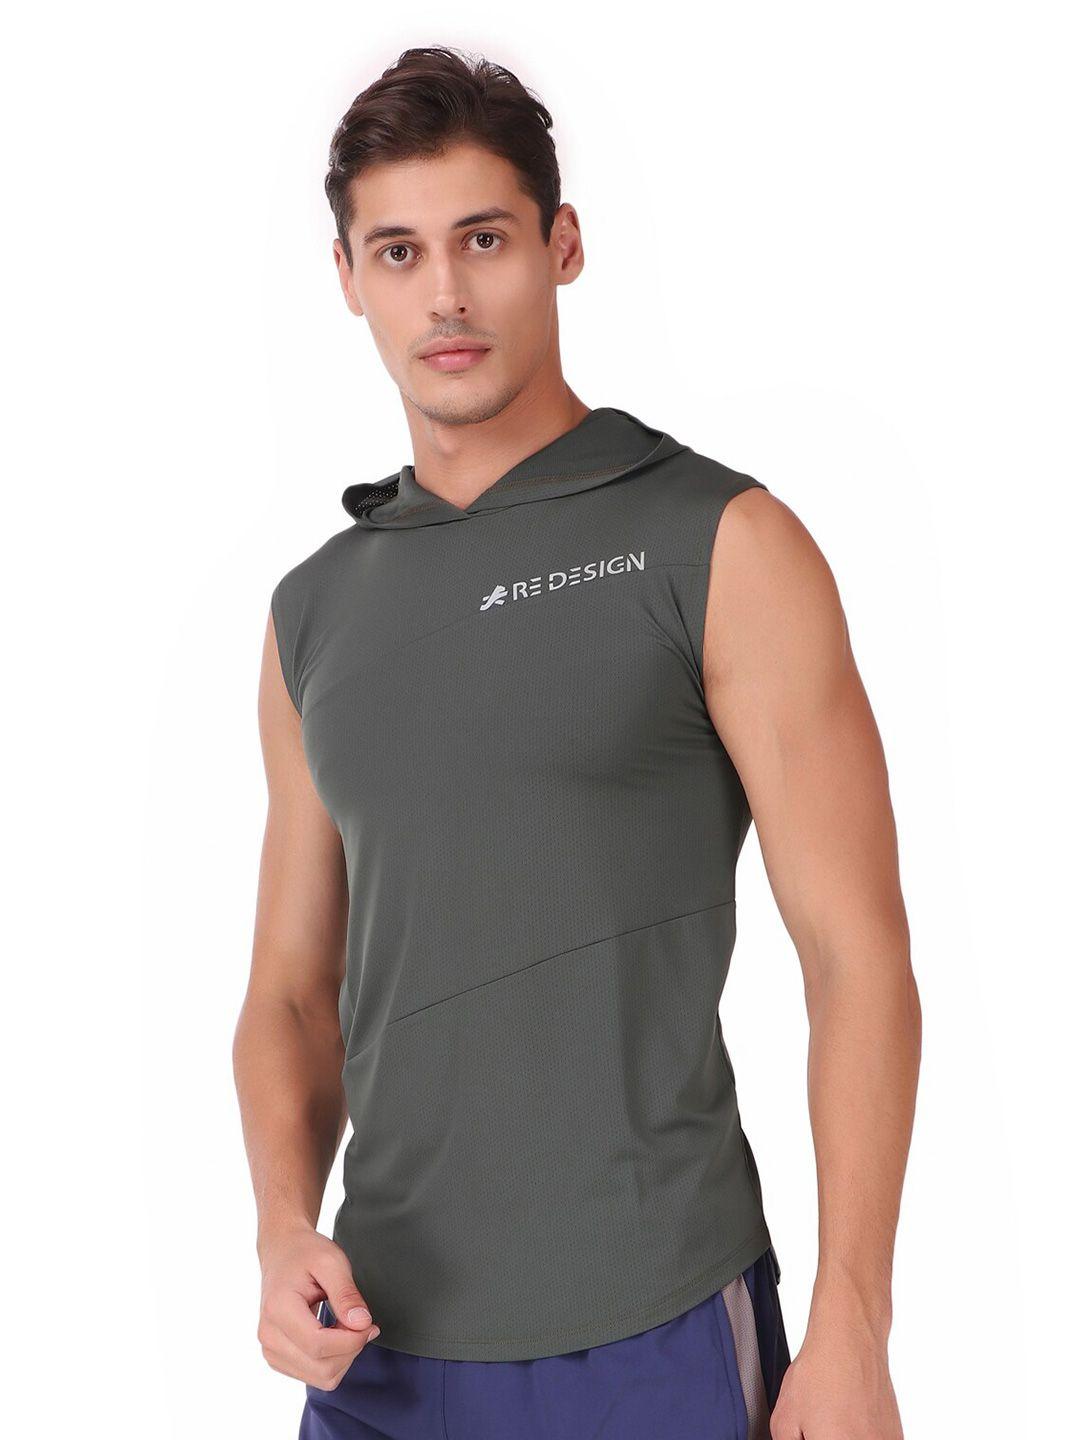 redesign hooded sleeveless t-shirt